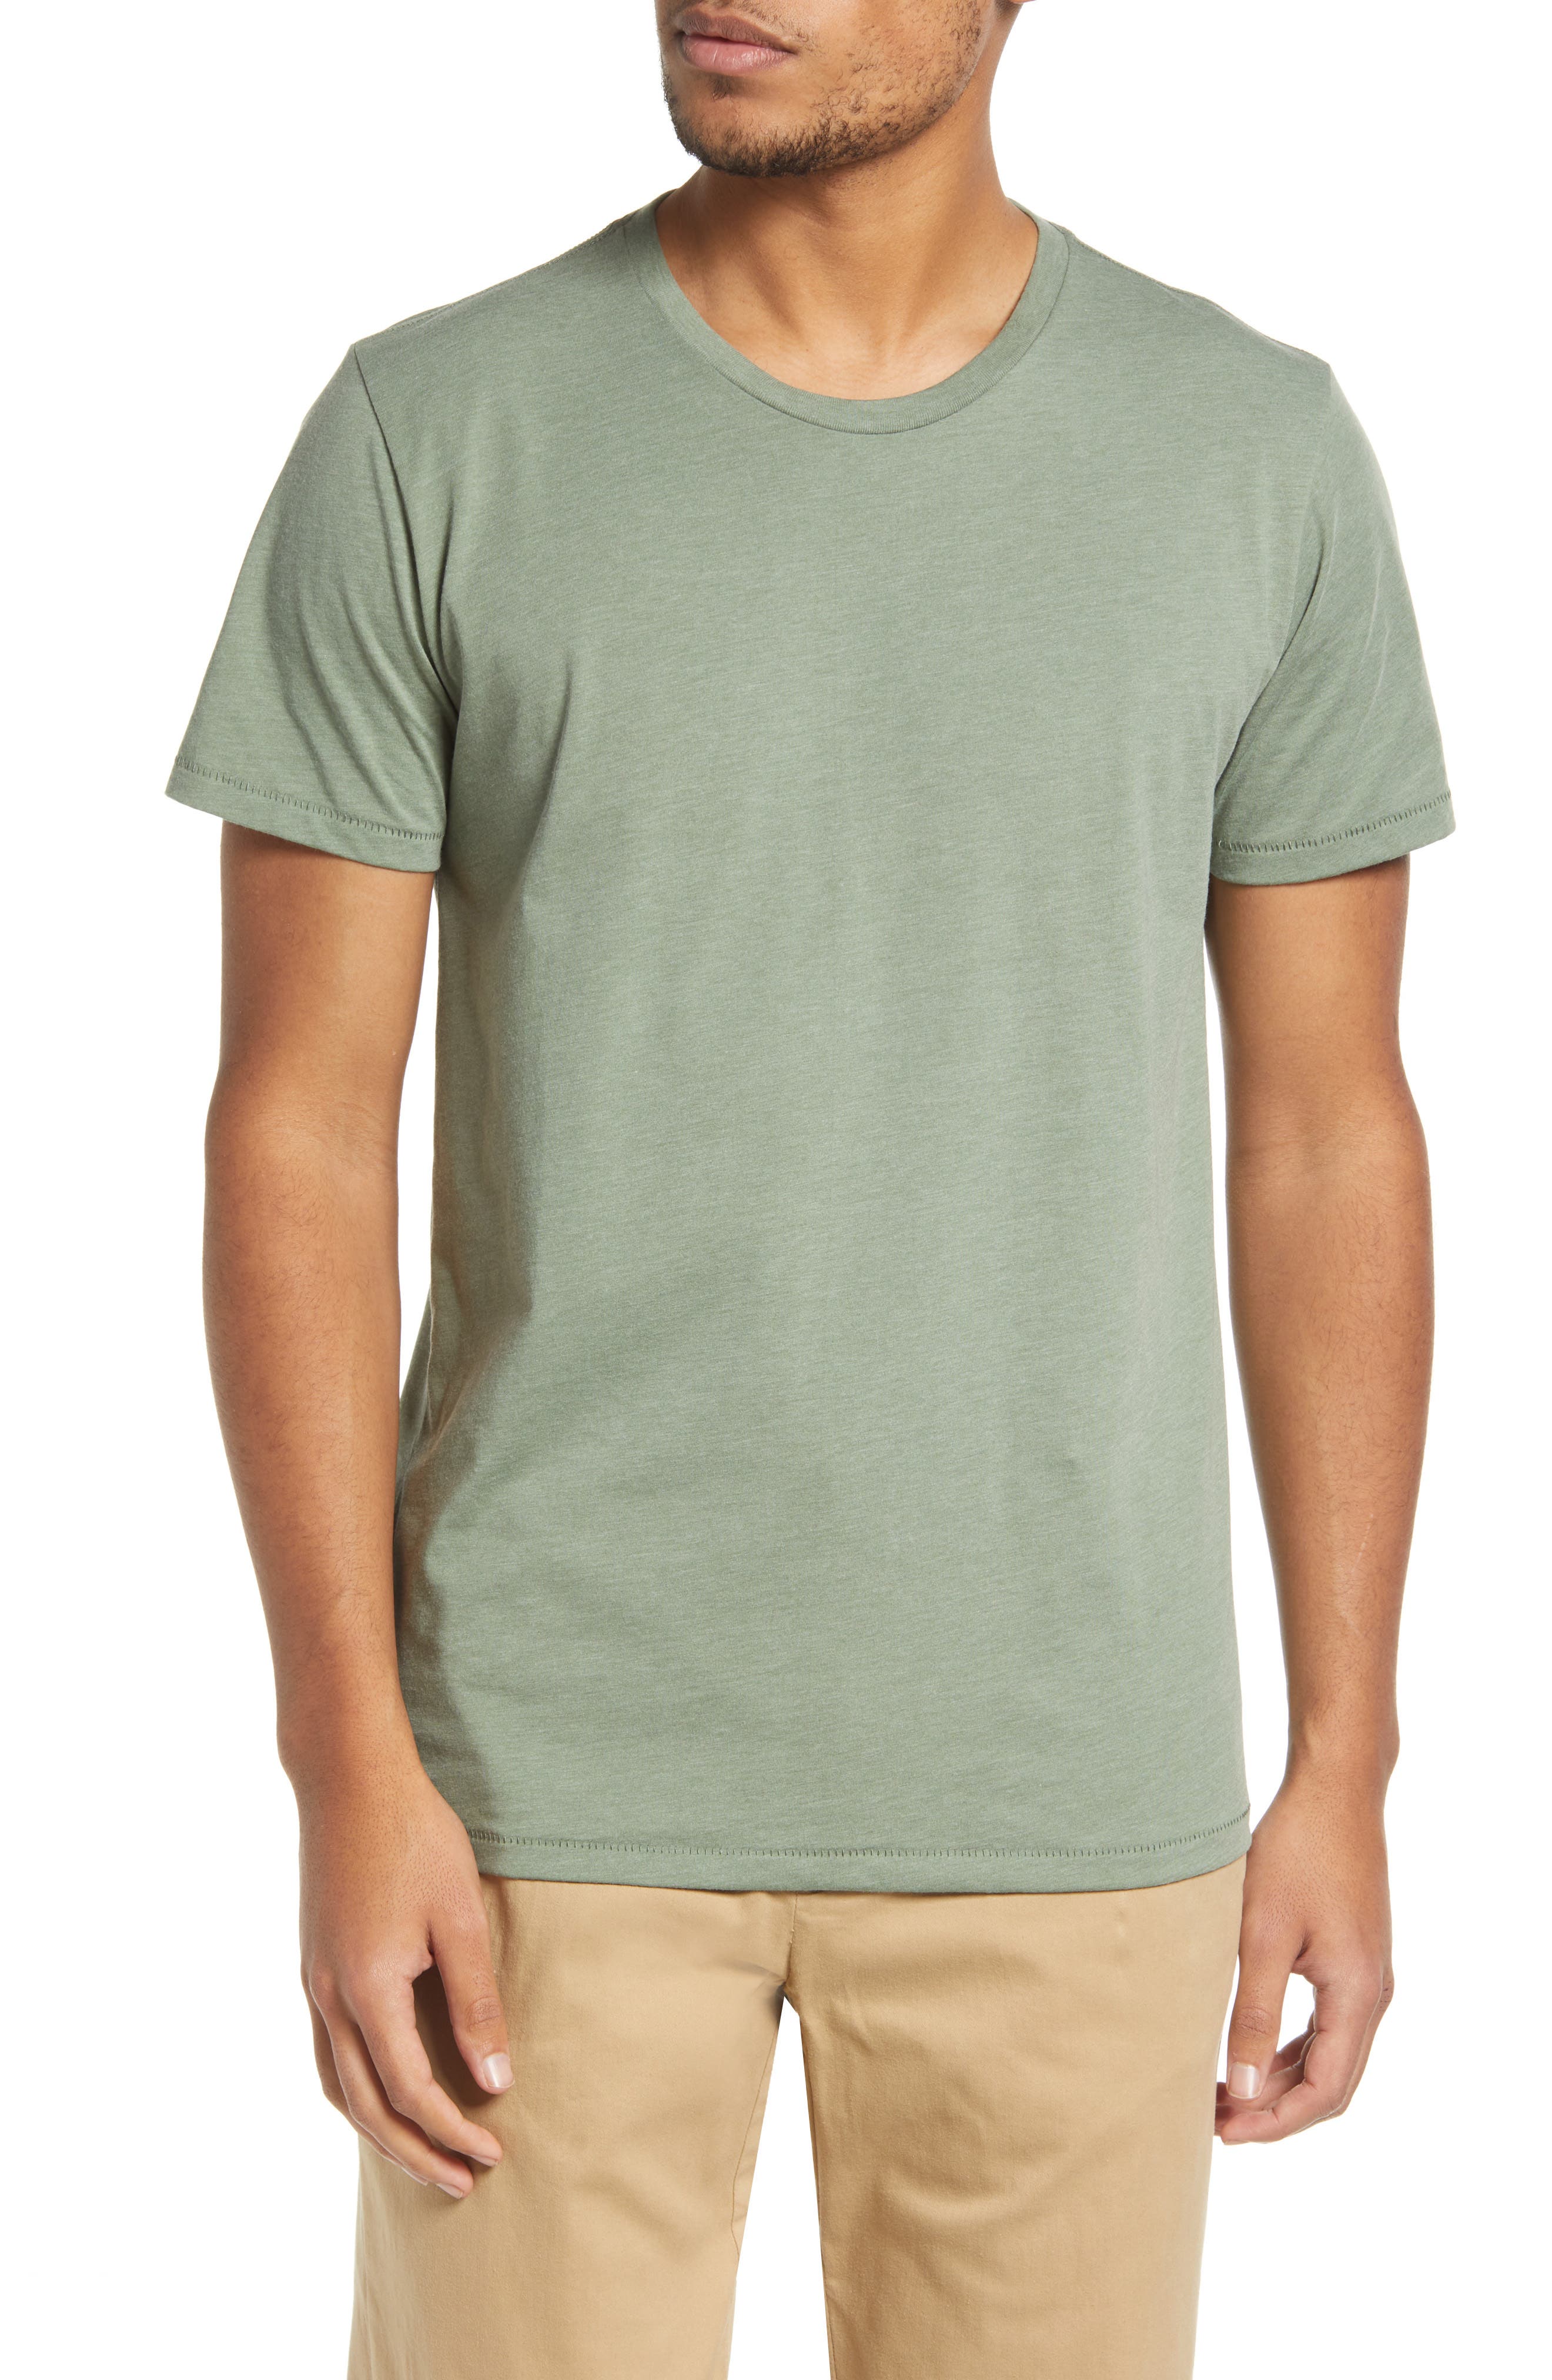 Mens Basic Crew Neck Cotton Striped Long/Short Sleeve T-Shirt Tops 